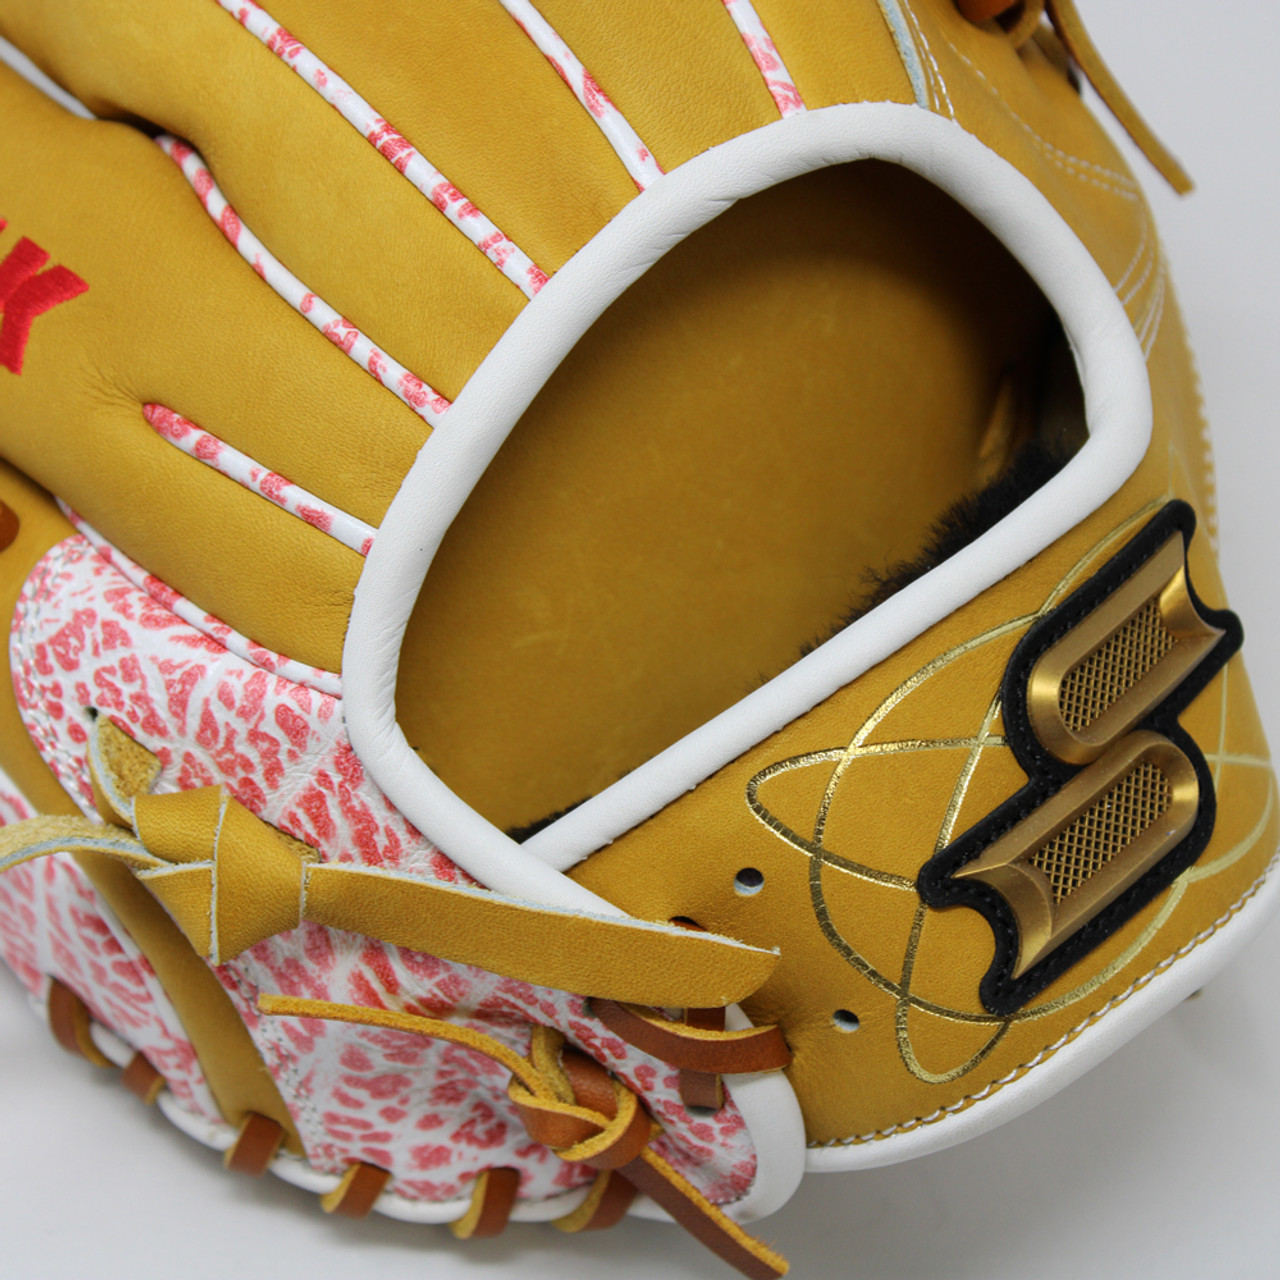 What Pros Wear: Javier Baez' SSK Ikigai Baez ASG 2019 Glove